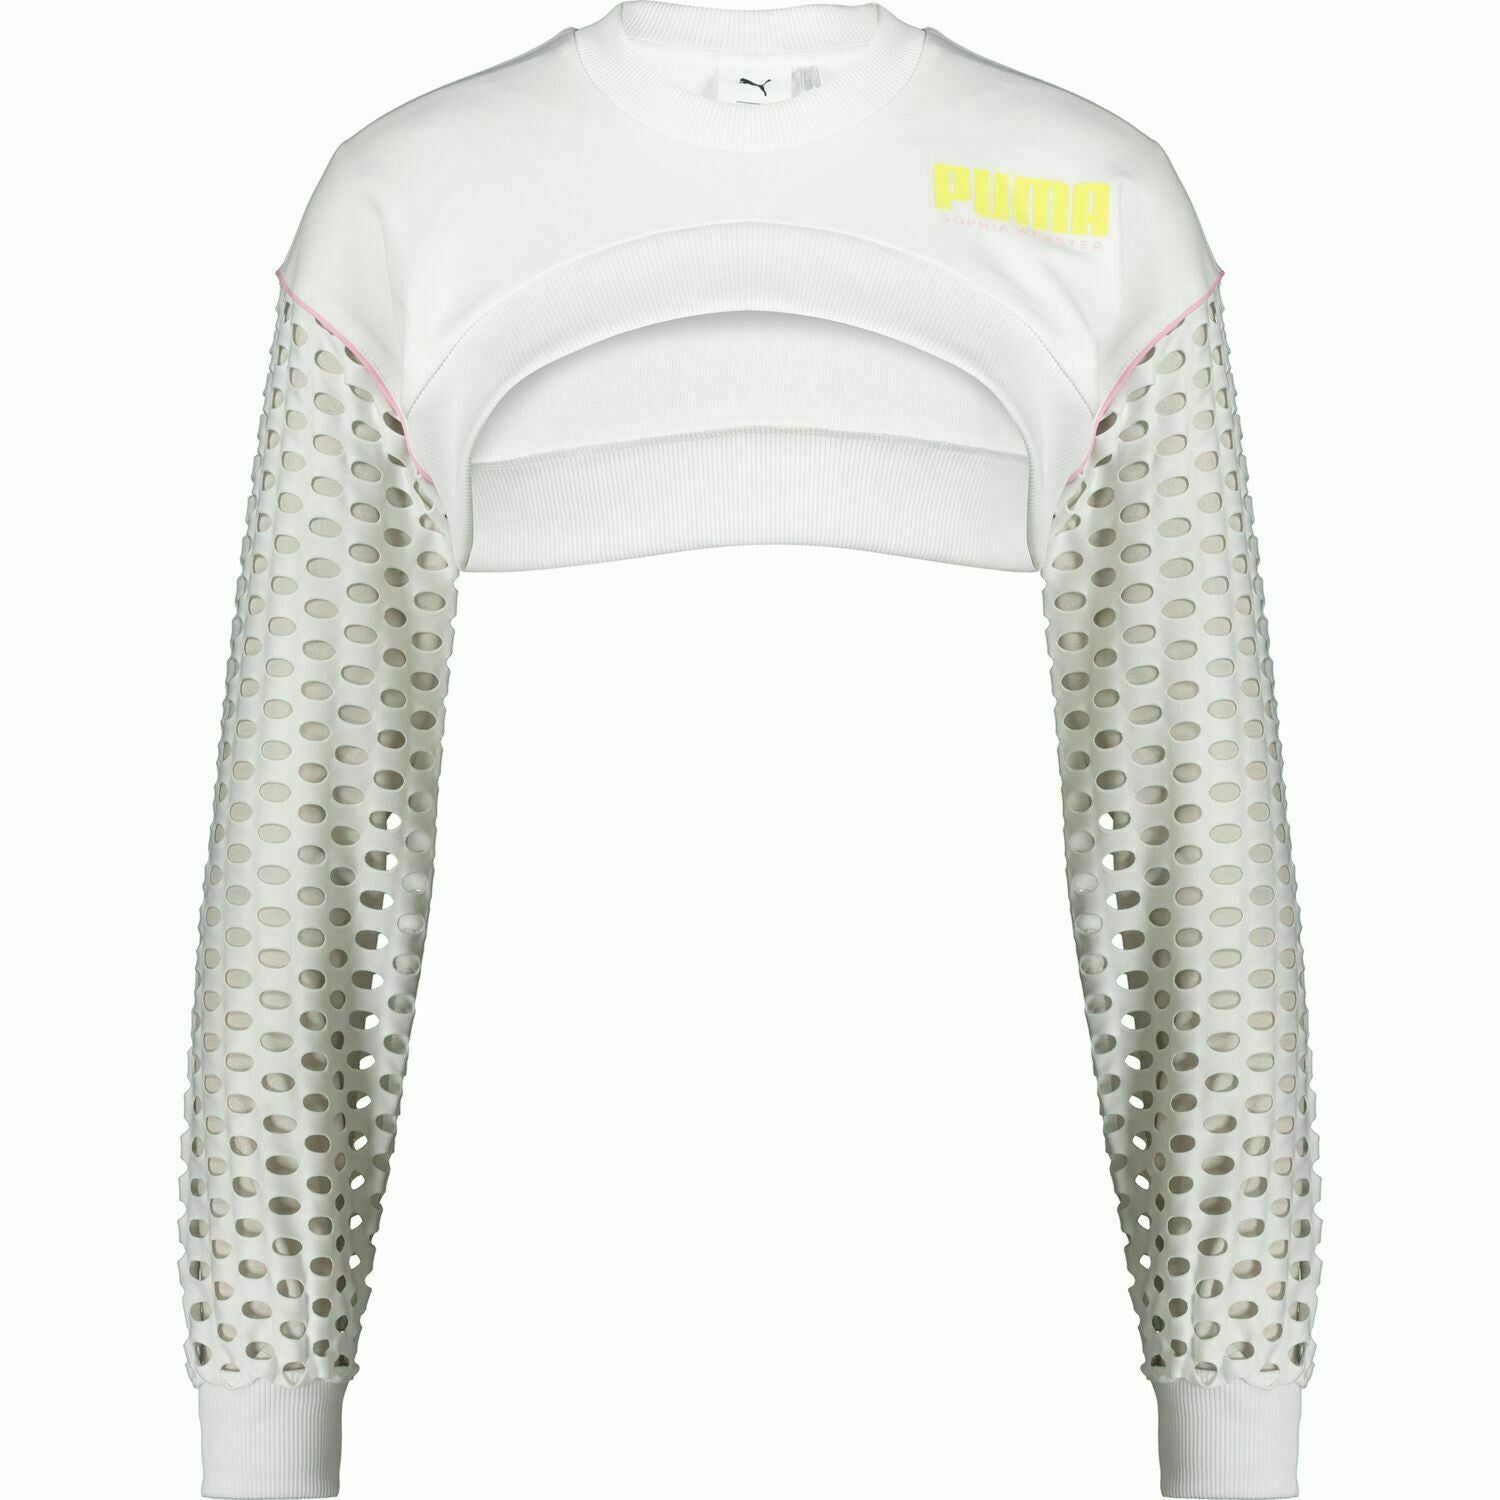 PUMA x SOPHIA WEBSTER Women's White Extreme Crop Sweatshirt Top, size XS